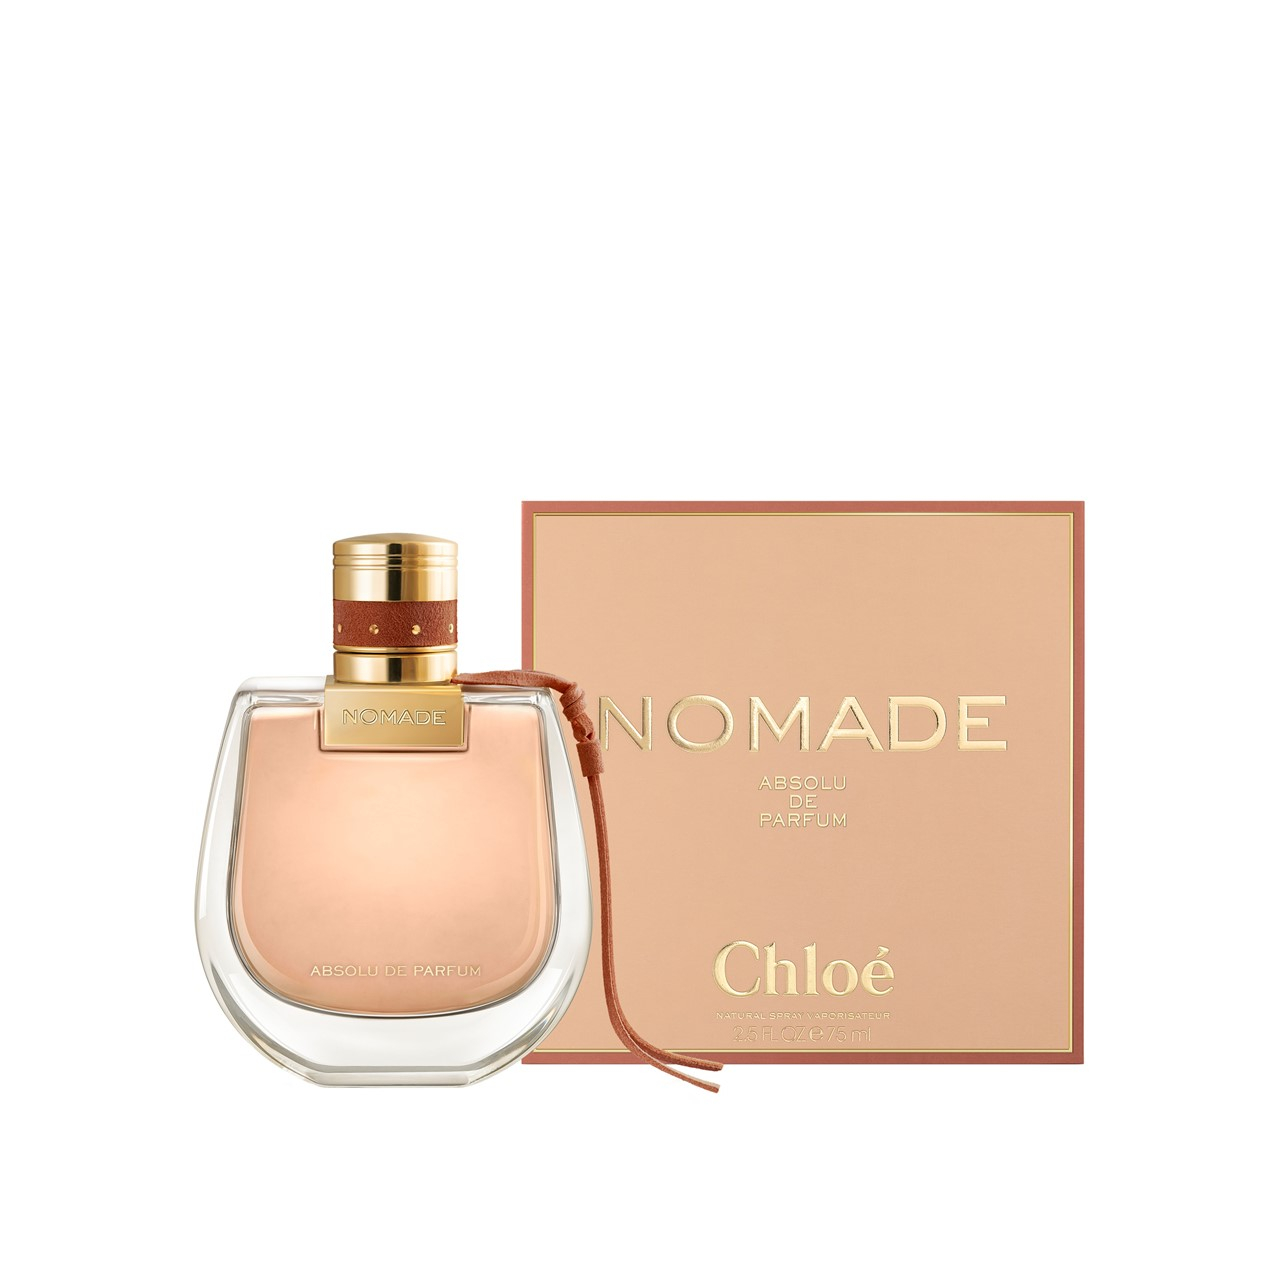 Chloé Nomade Absolu Eau de Parfum 75ml